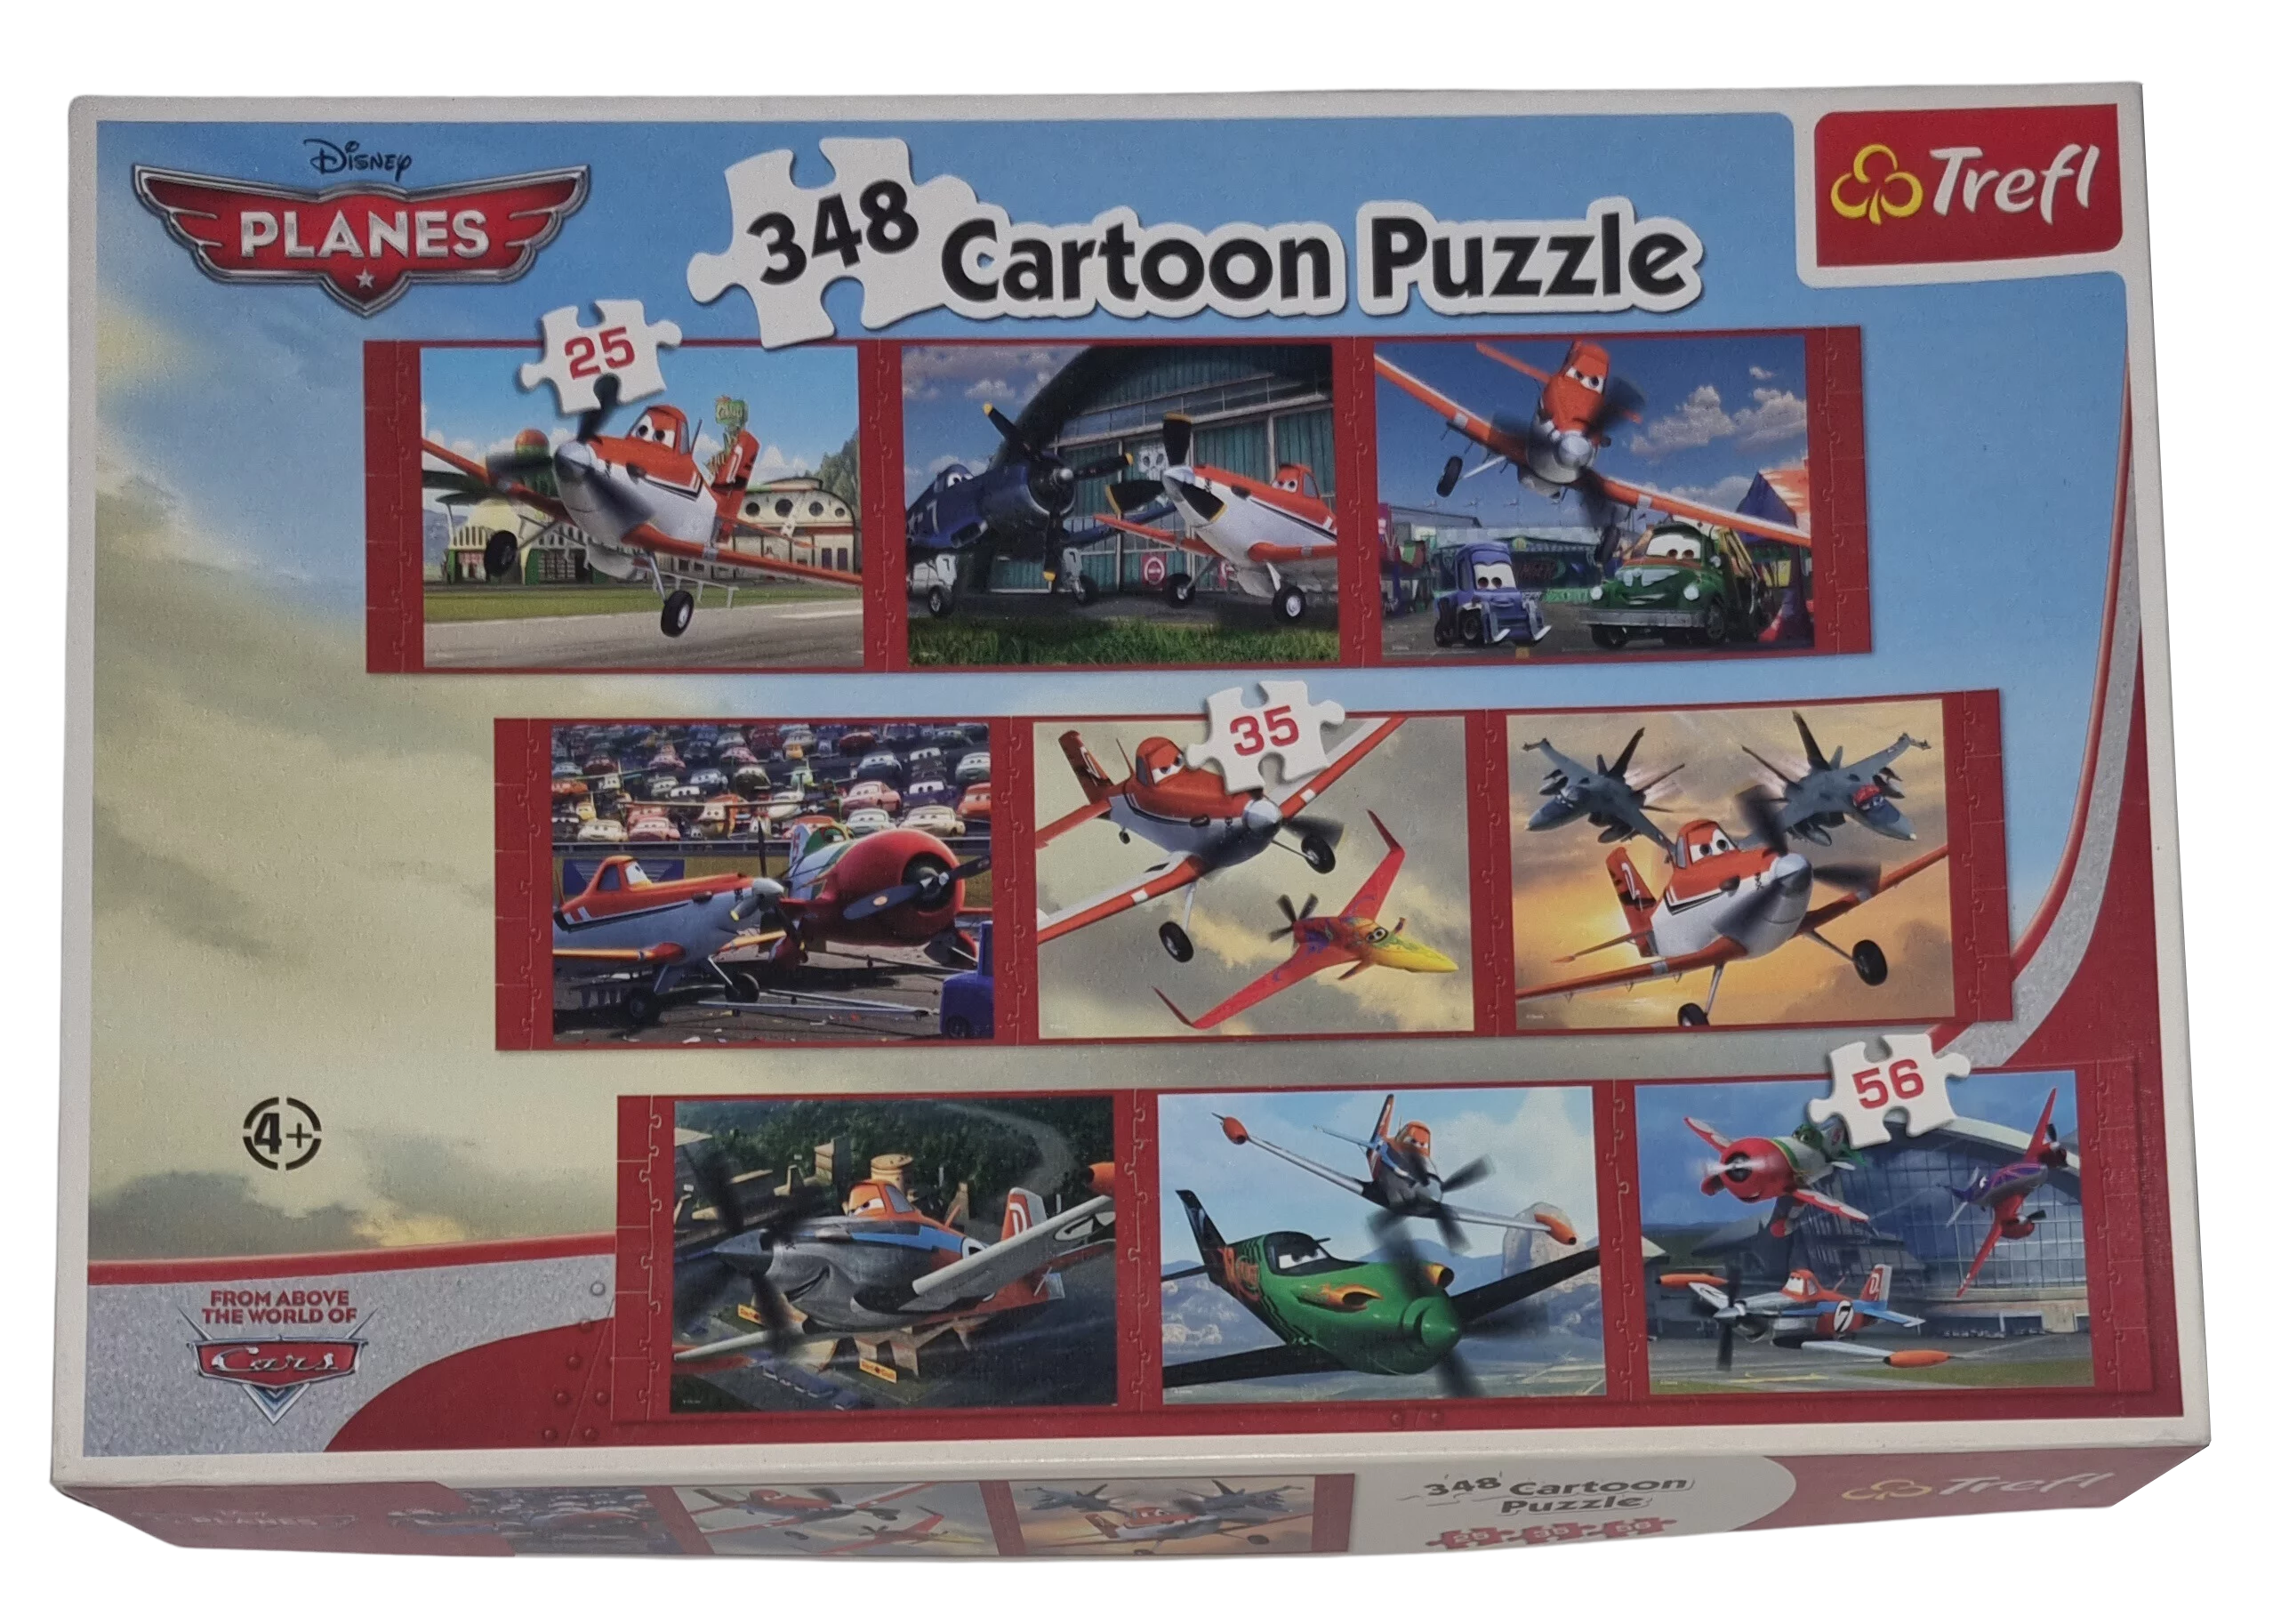 Trefl Disney Planes 348 Cartoon Puzzle 90312 3x25Teile, 3x35Teile, 3x56Teile